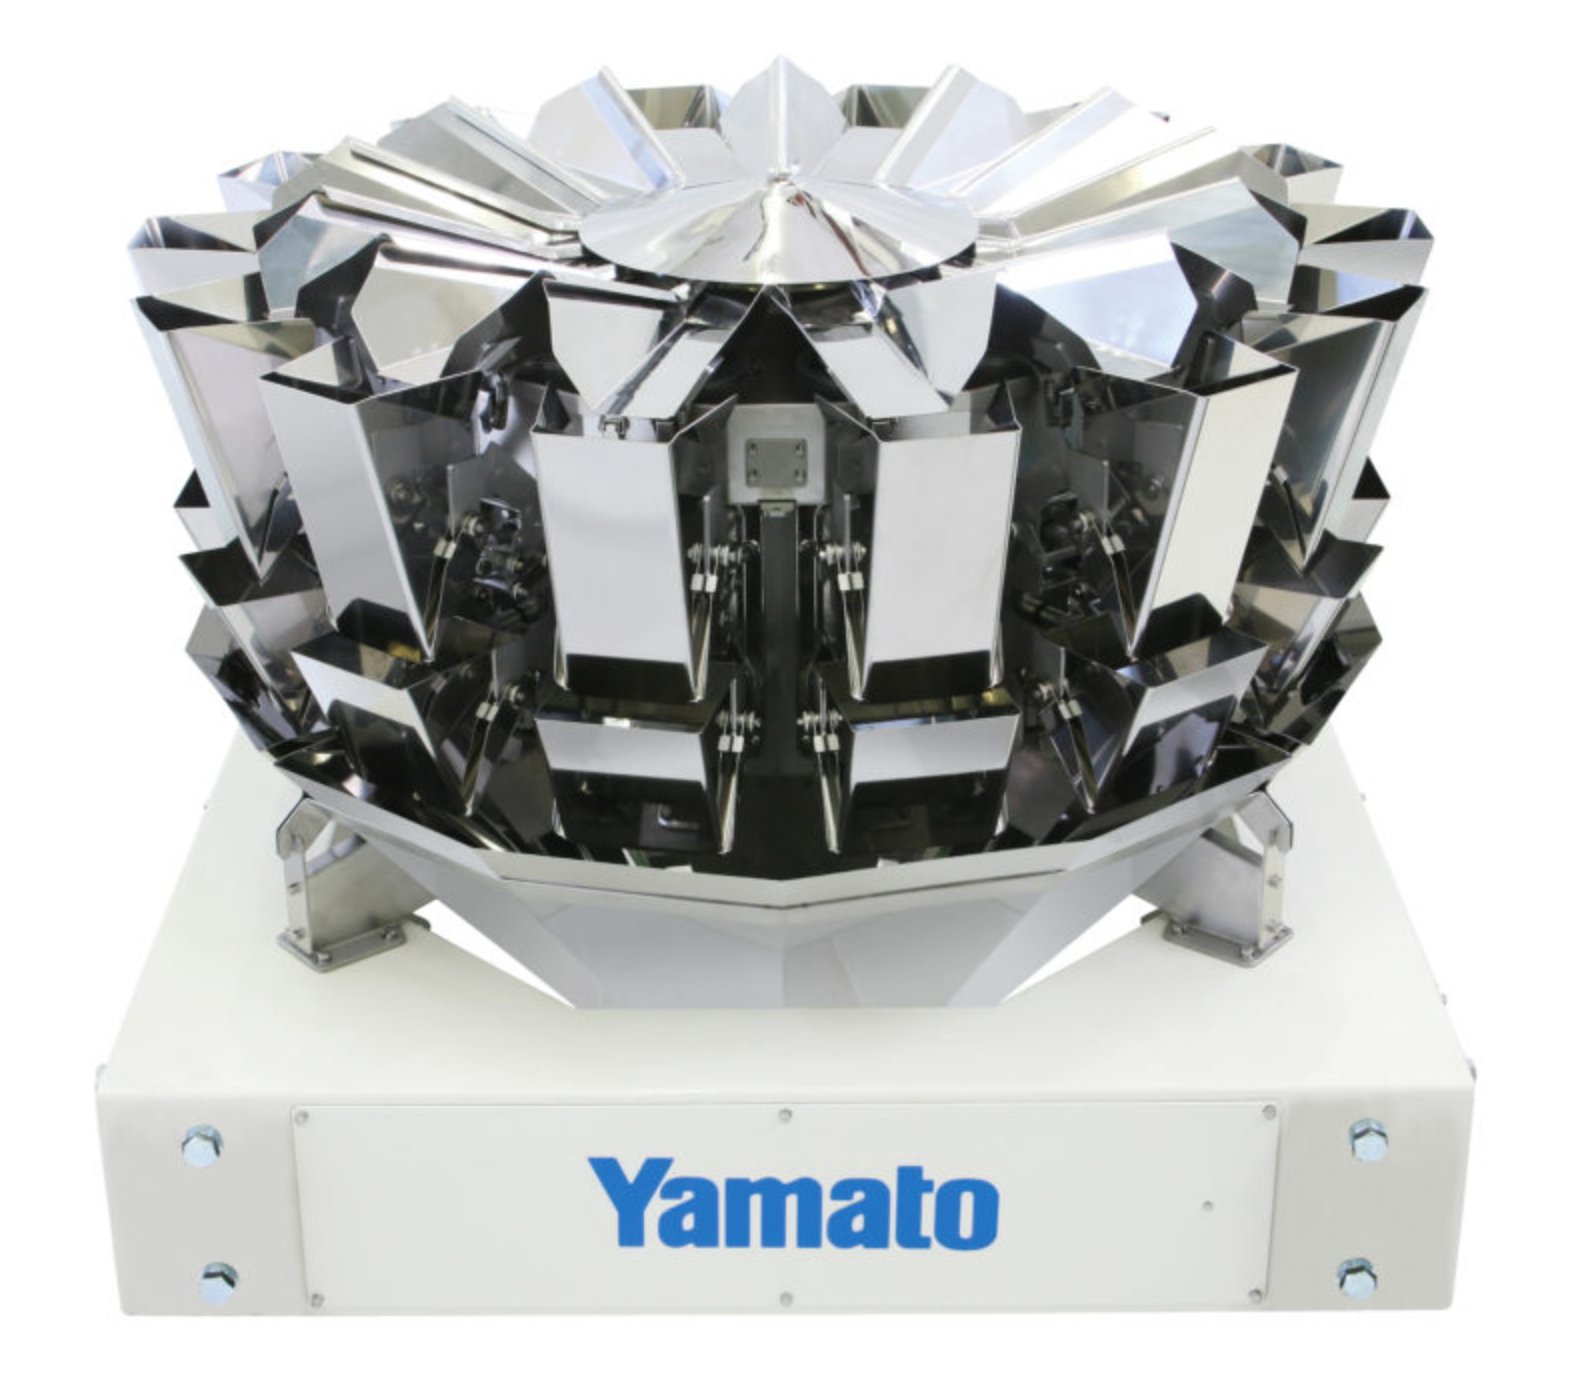 Yamato Alpha Advance Series combination scales